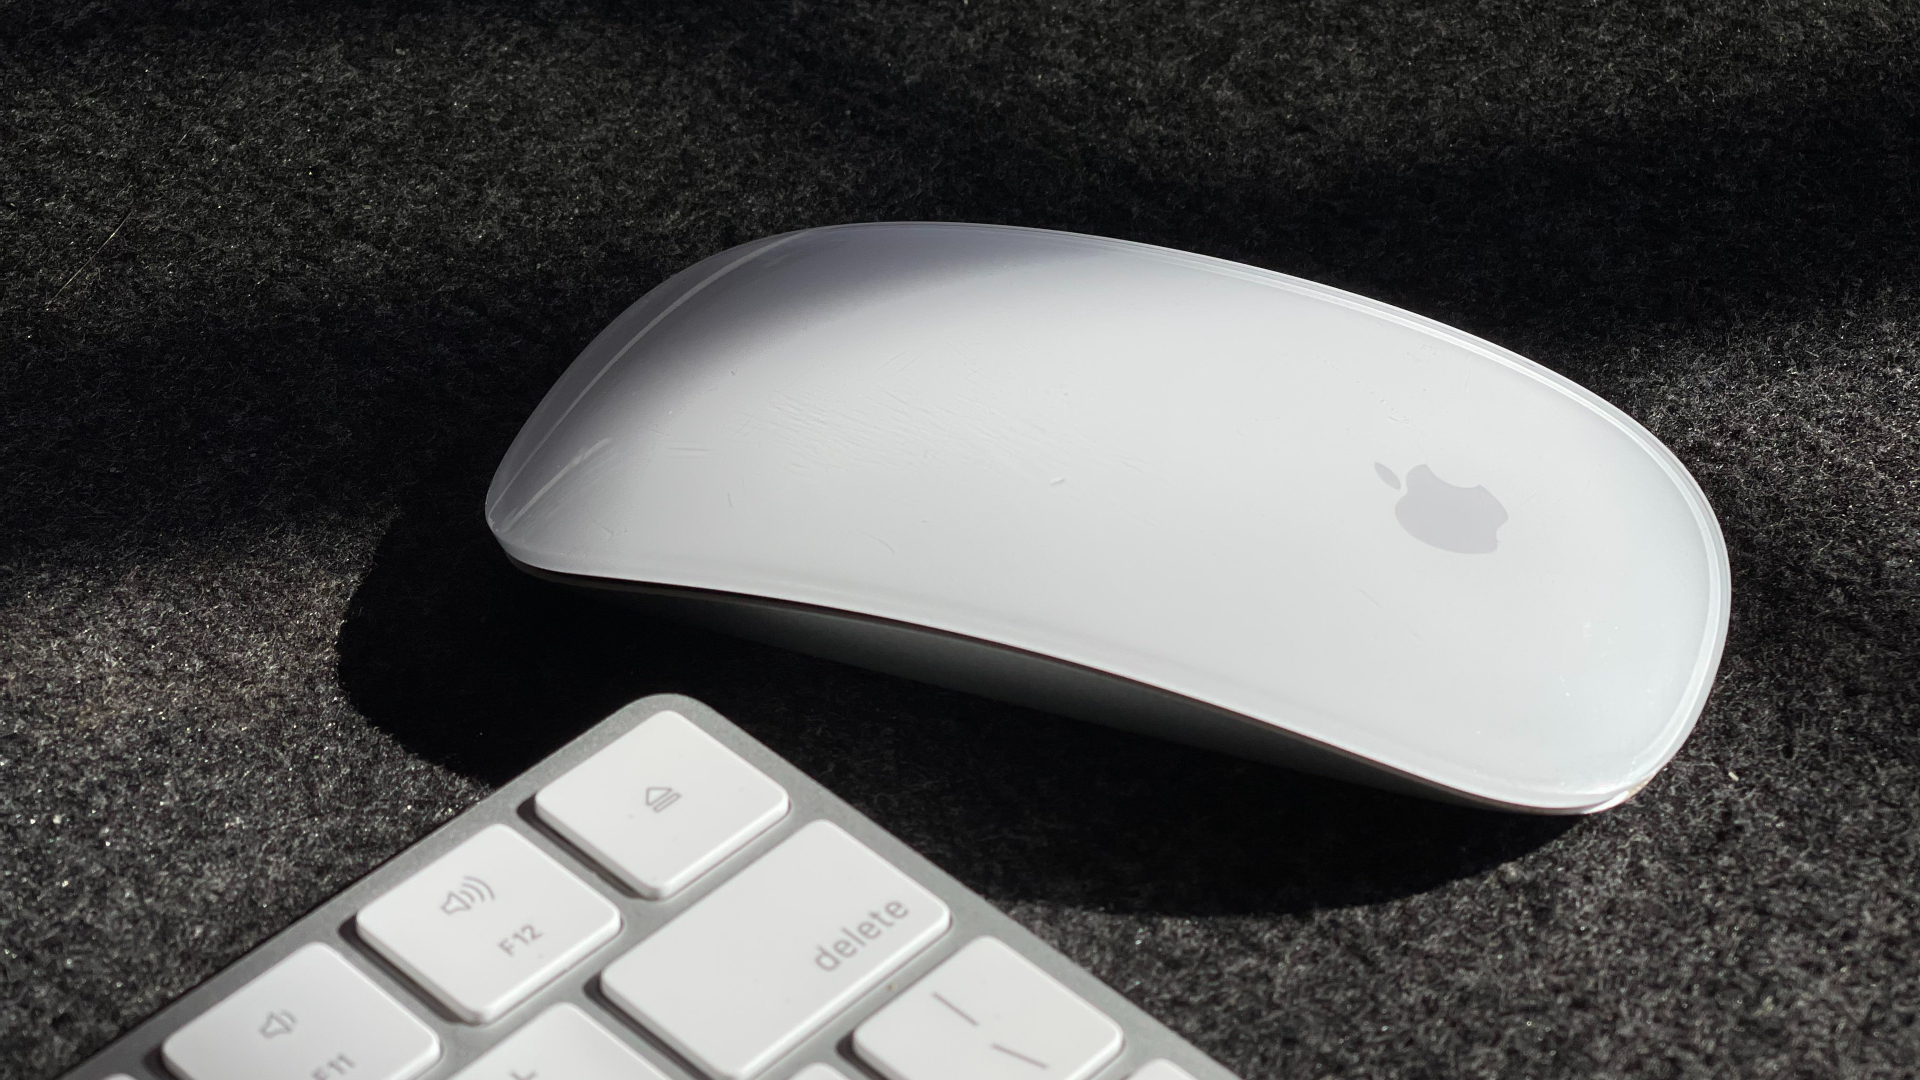 mouse cursor lagging on Mac